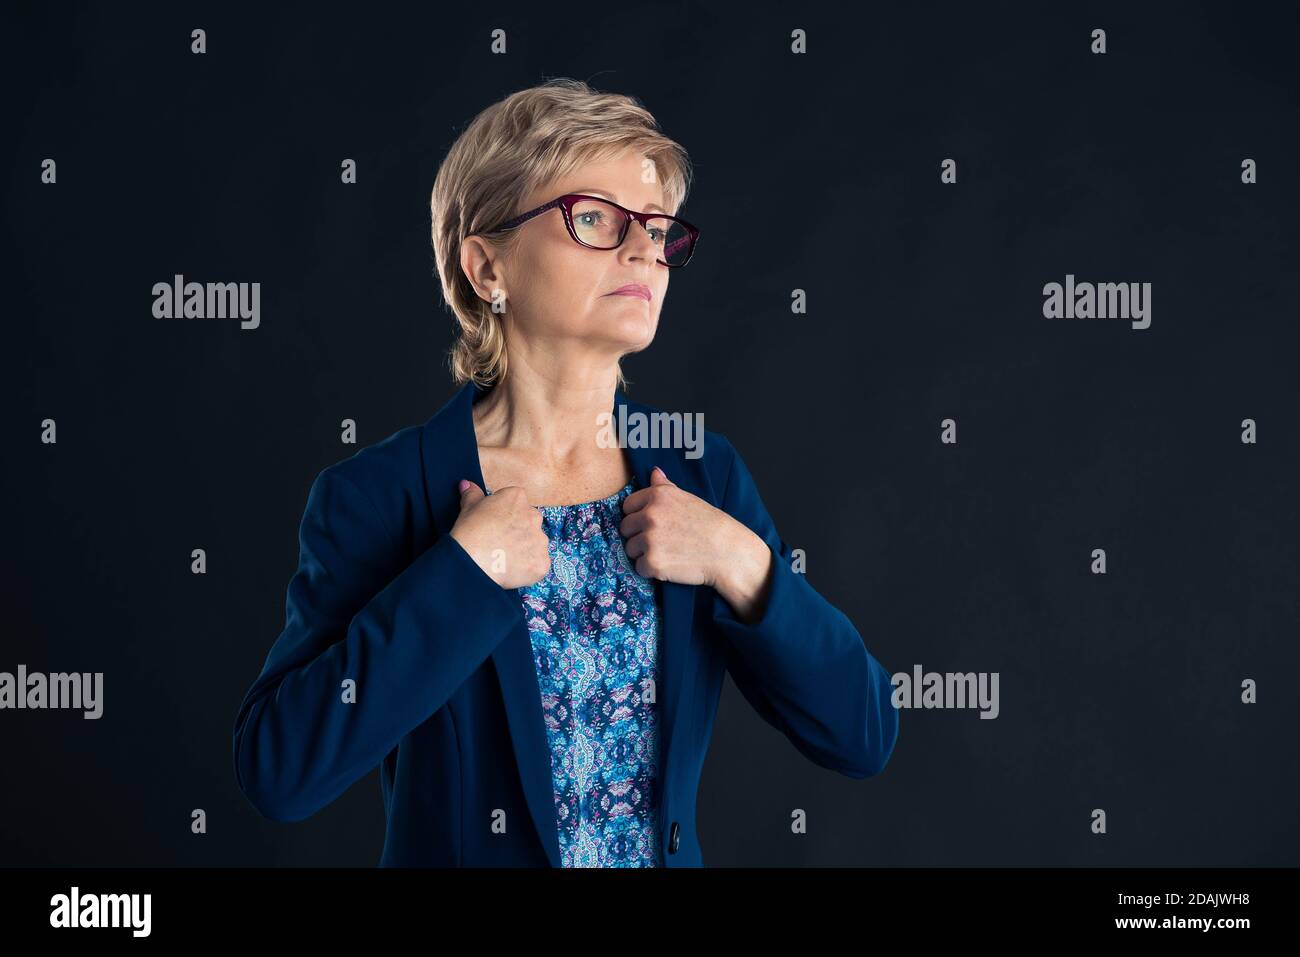 Older secretary fixing her blue jacket on a dark background wearing magenta glasses Stock Photo